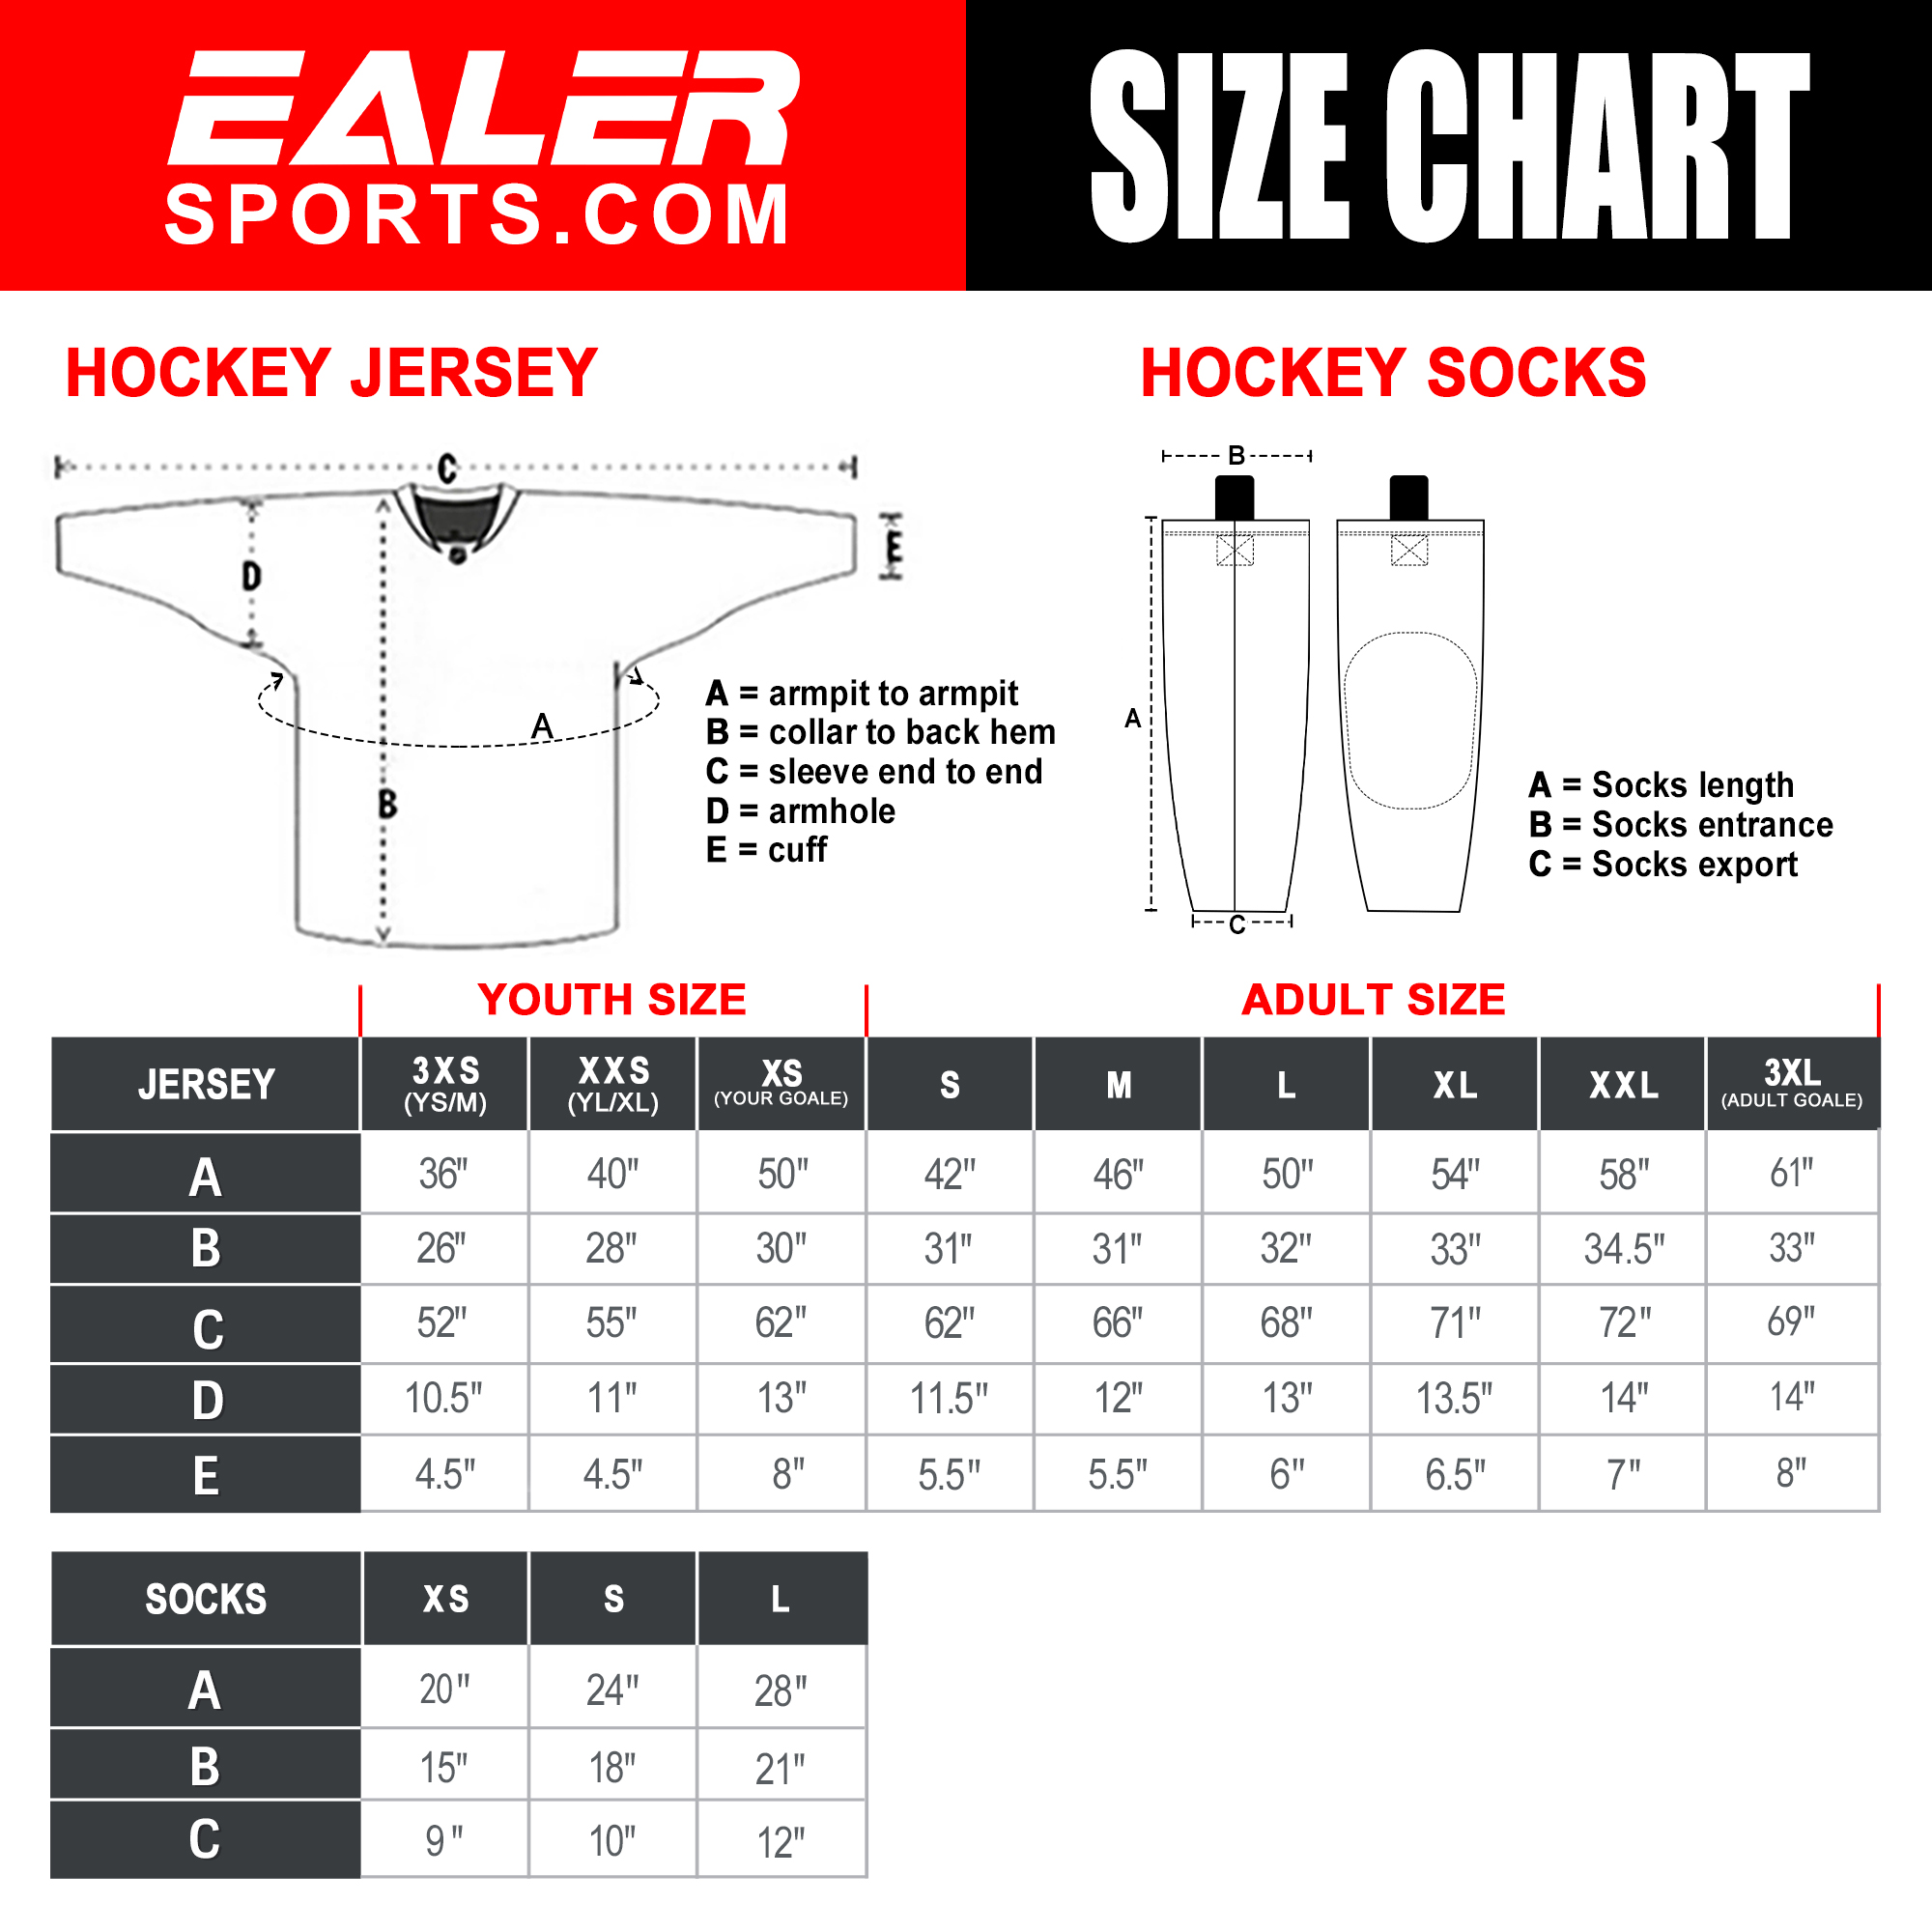 H900-EF004 Blue Blank hockey Practice Jerseys